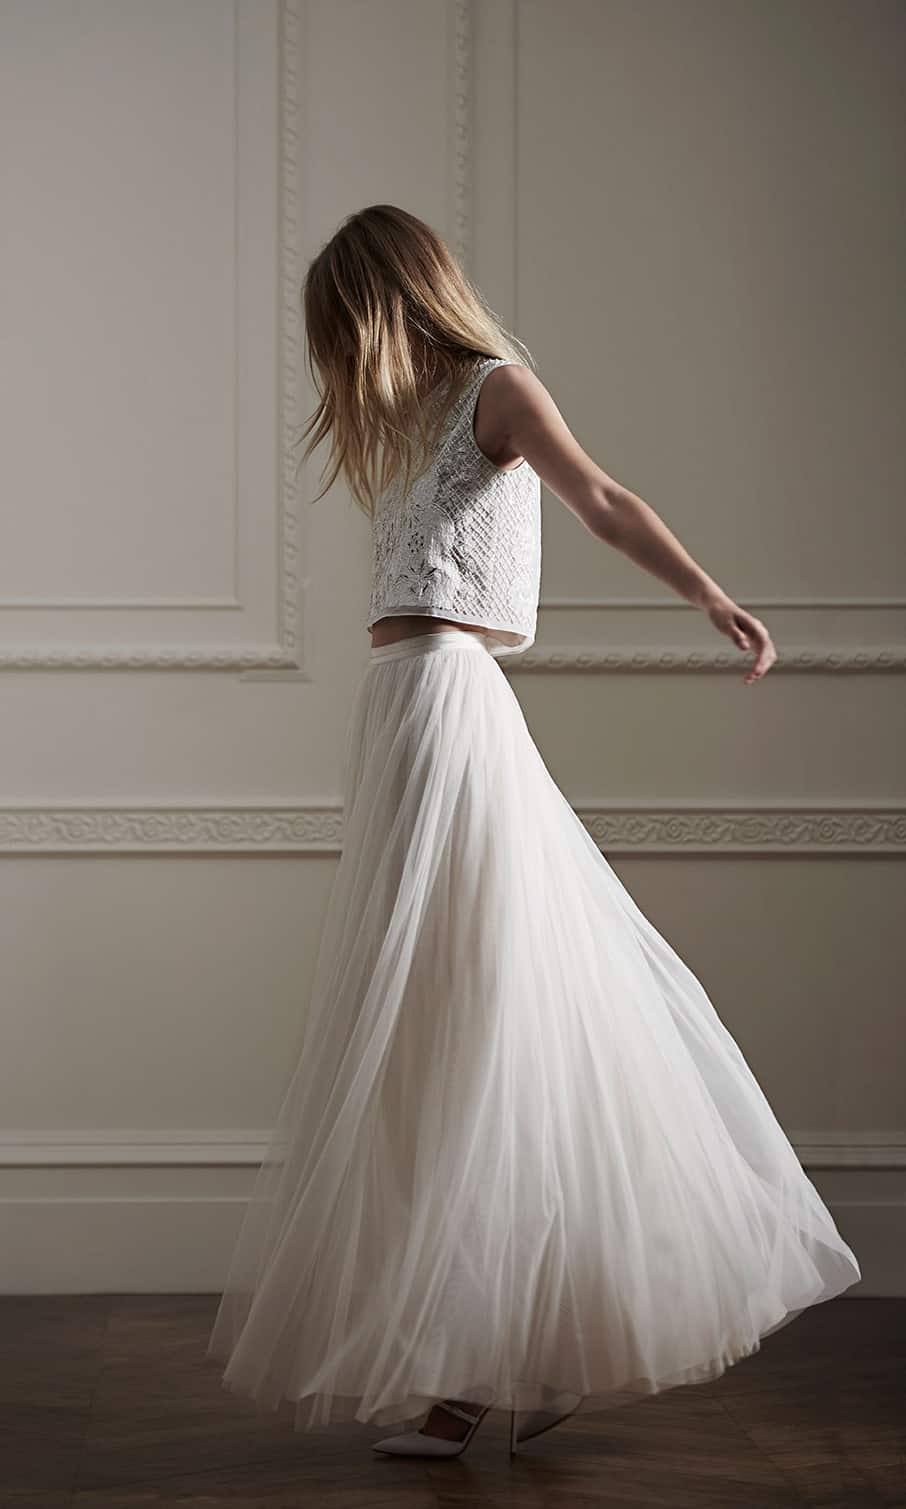 April s Top 5 Wedding Dresses  Under  1000  nouba com au  